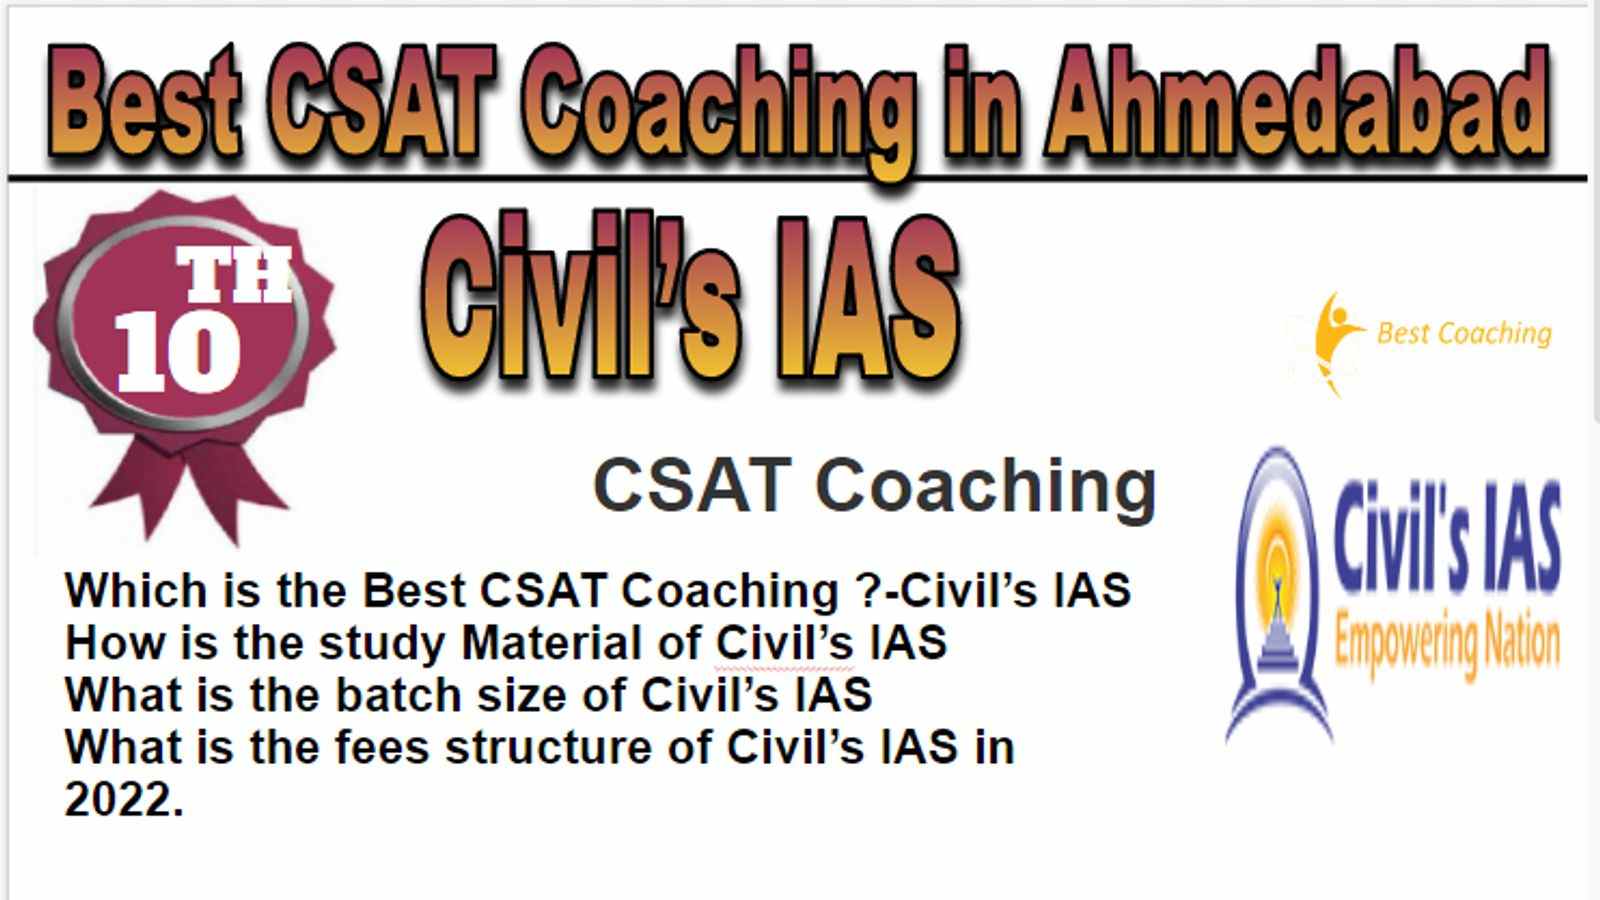 Rank 10 Best CSAT Coaching in Ahmedabad